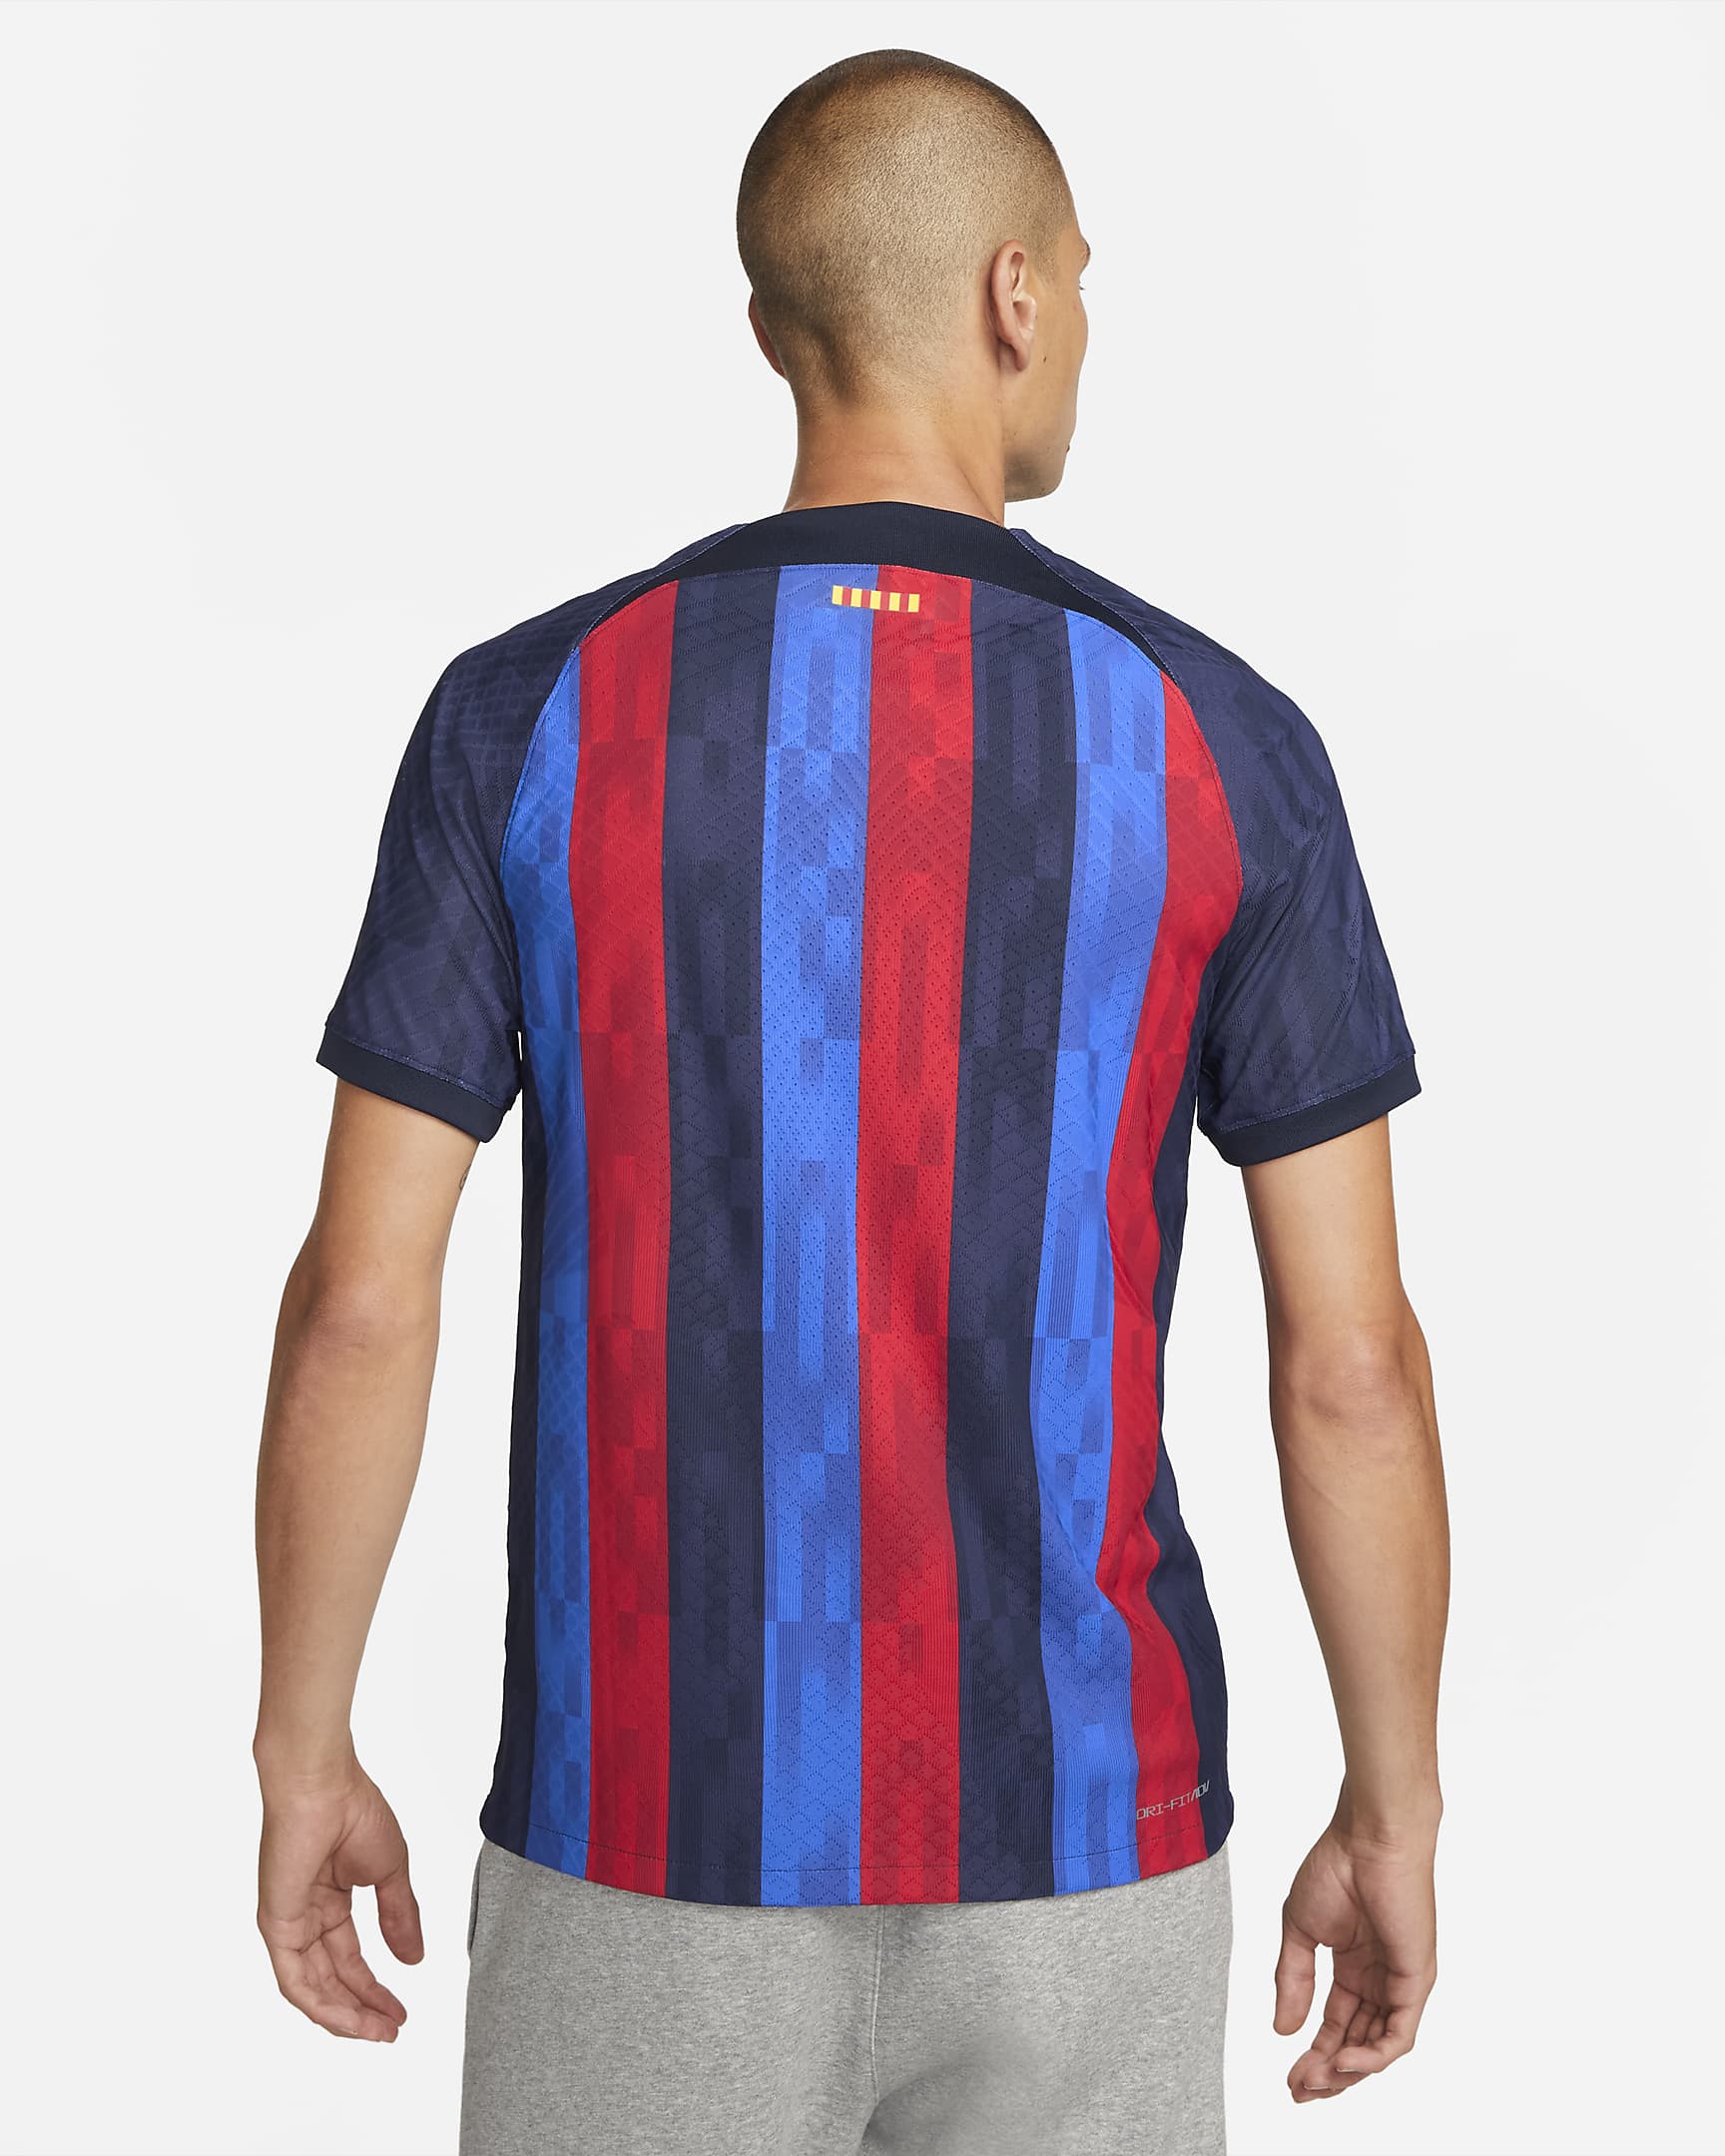 F.C. Barcelona 2022/23 Match Home Men's Nike Dri-FIT ADV Football Shirt ...